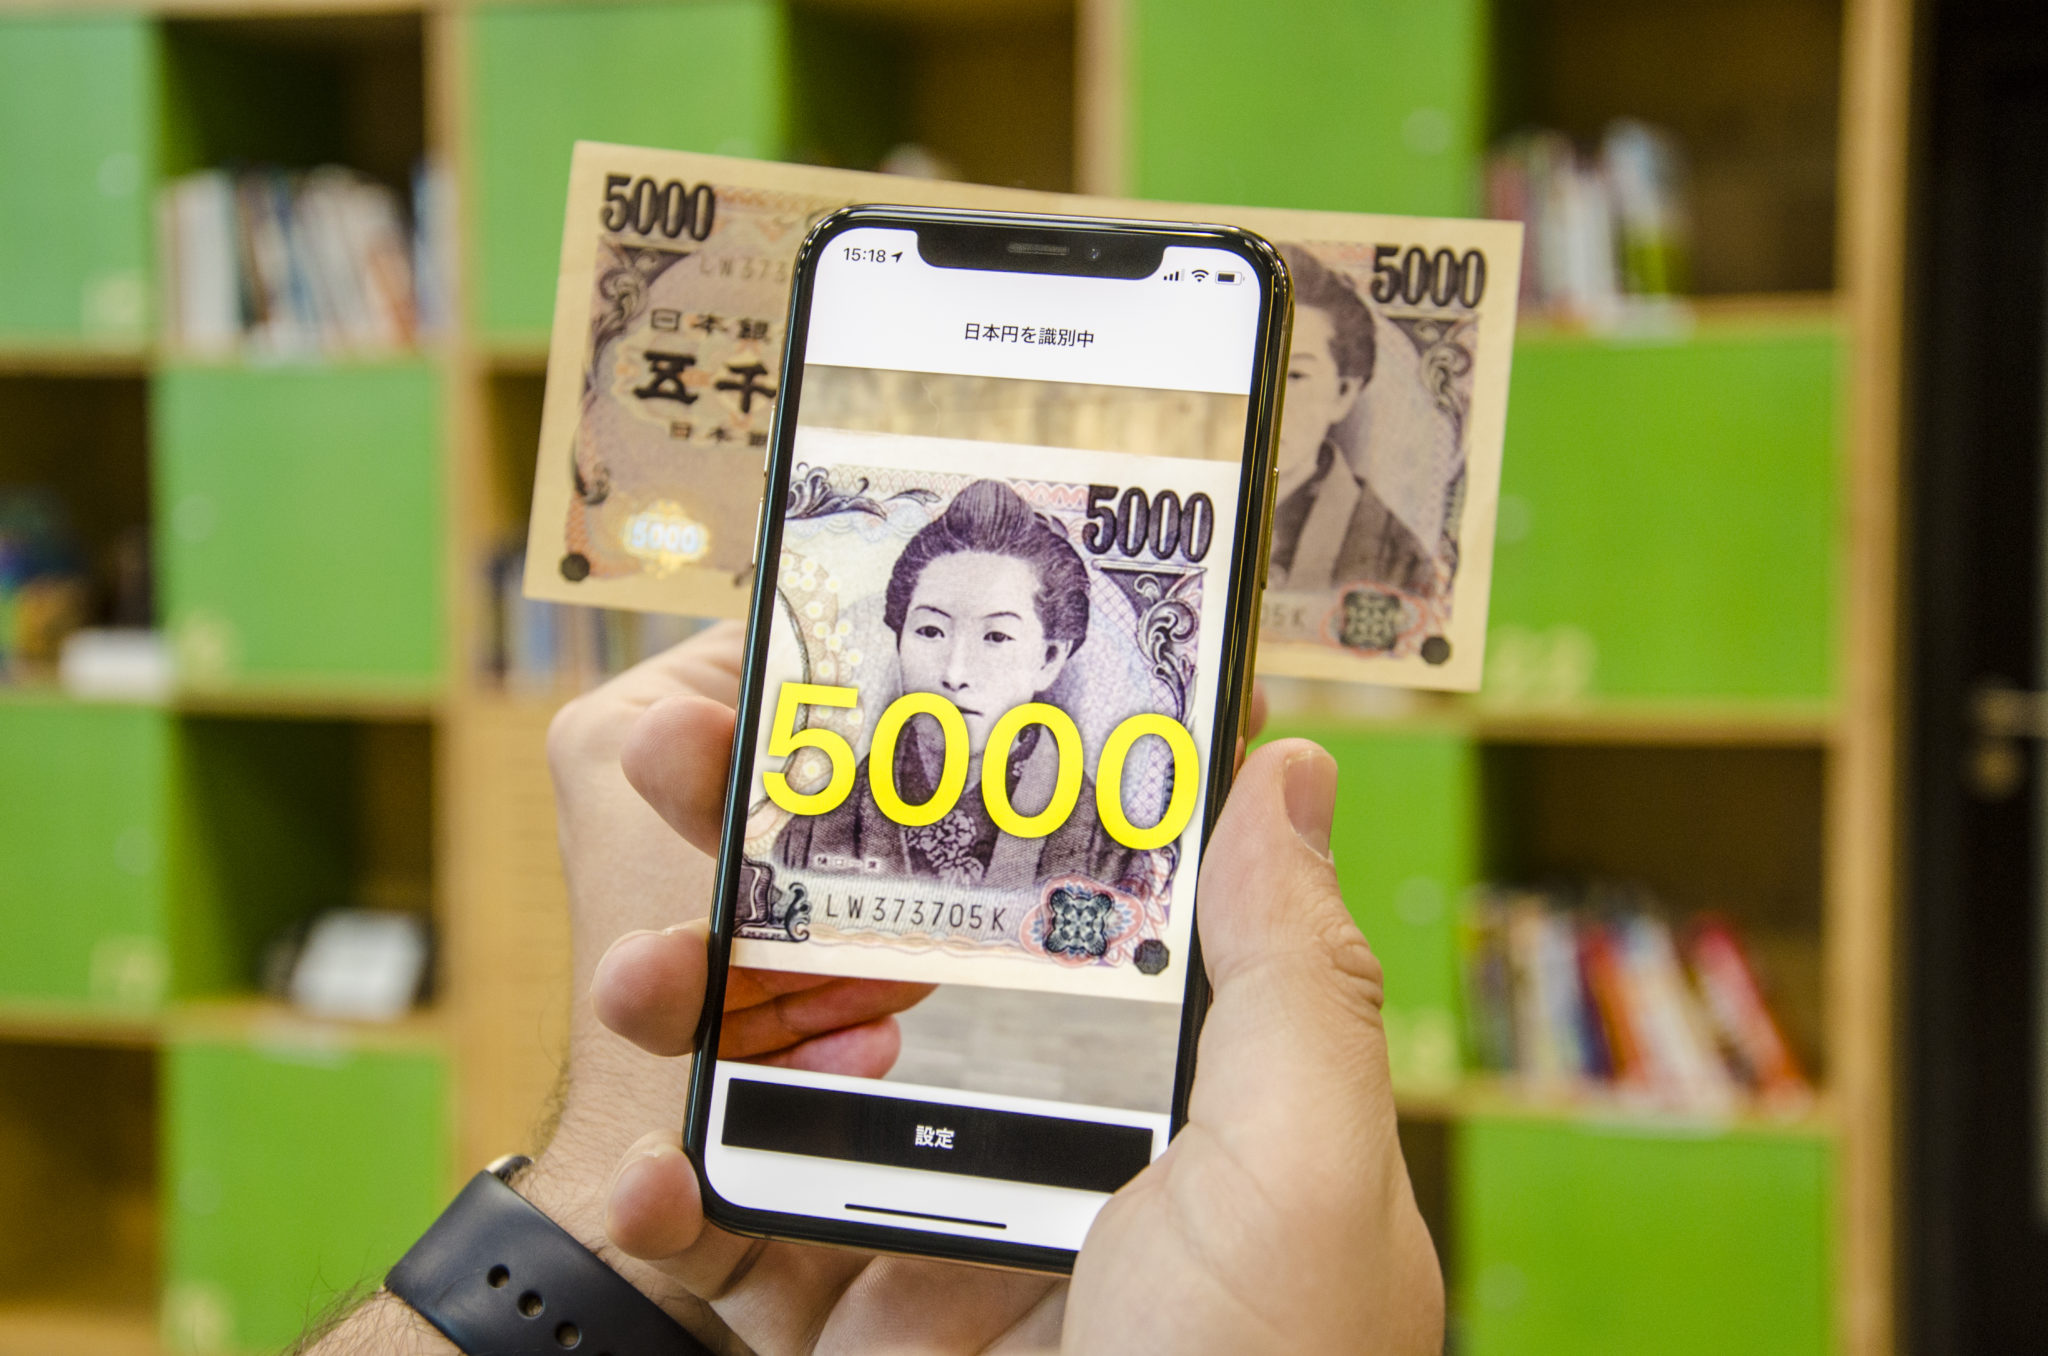 Cash Reader Money Reader Application For The Blind 通貨